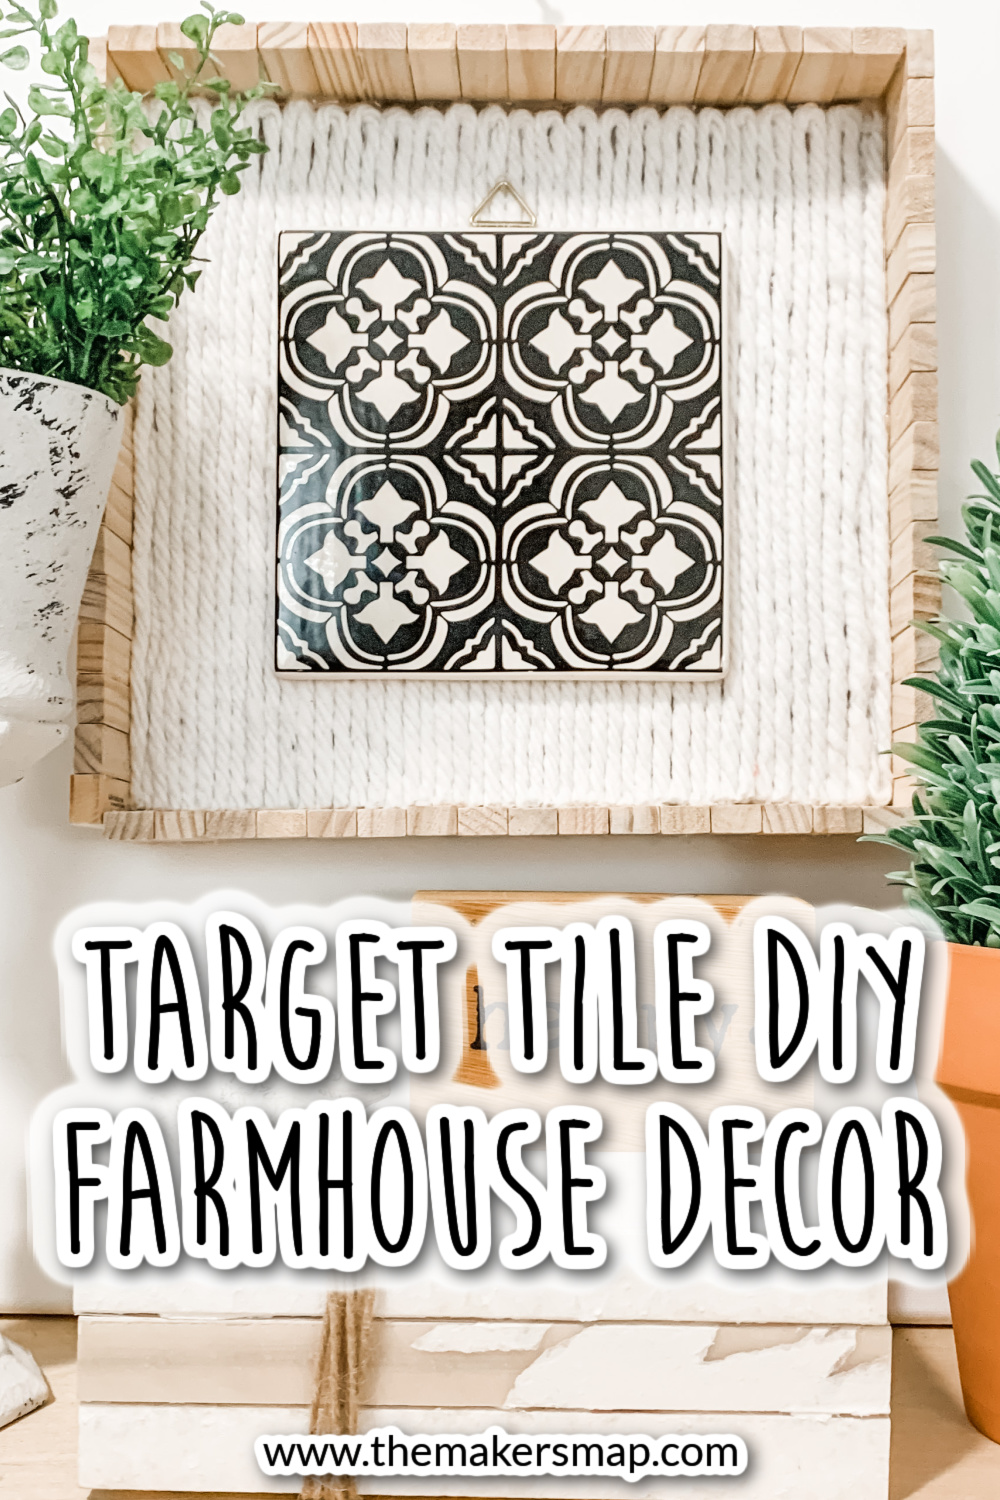 https://www.themakersmap.com/wp-content/uploads/2021/07/Target-Tile-DIY-Farmhouse-Decor-1-1.jpg